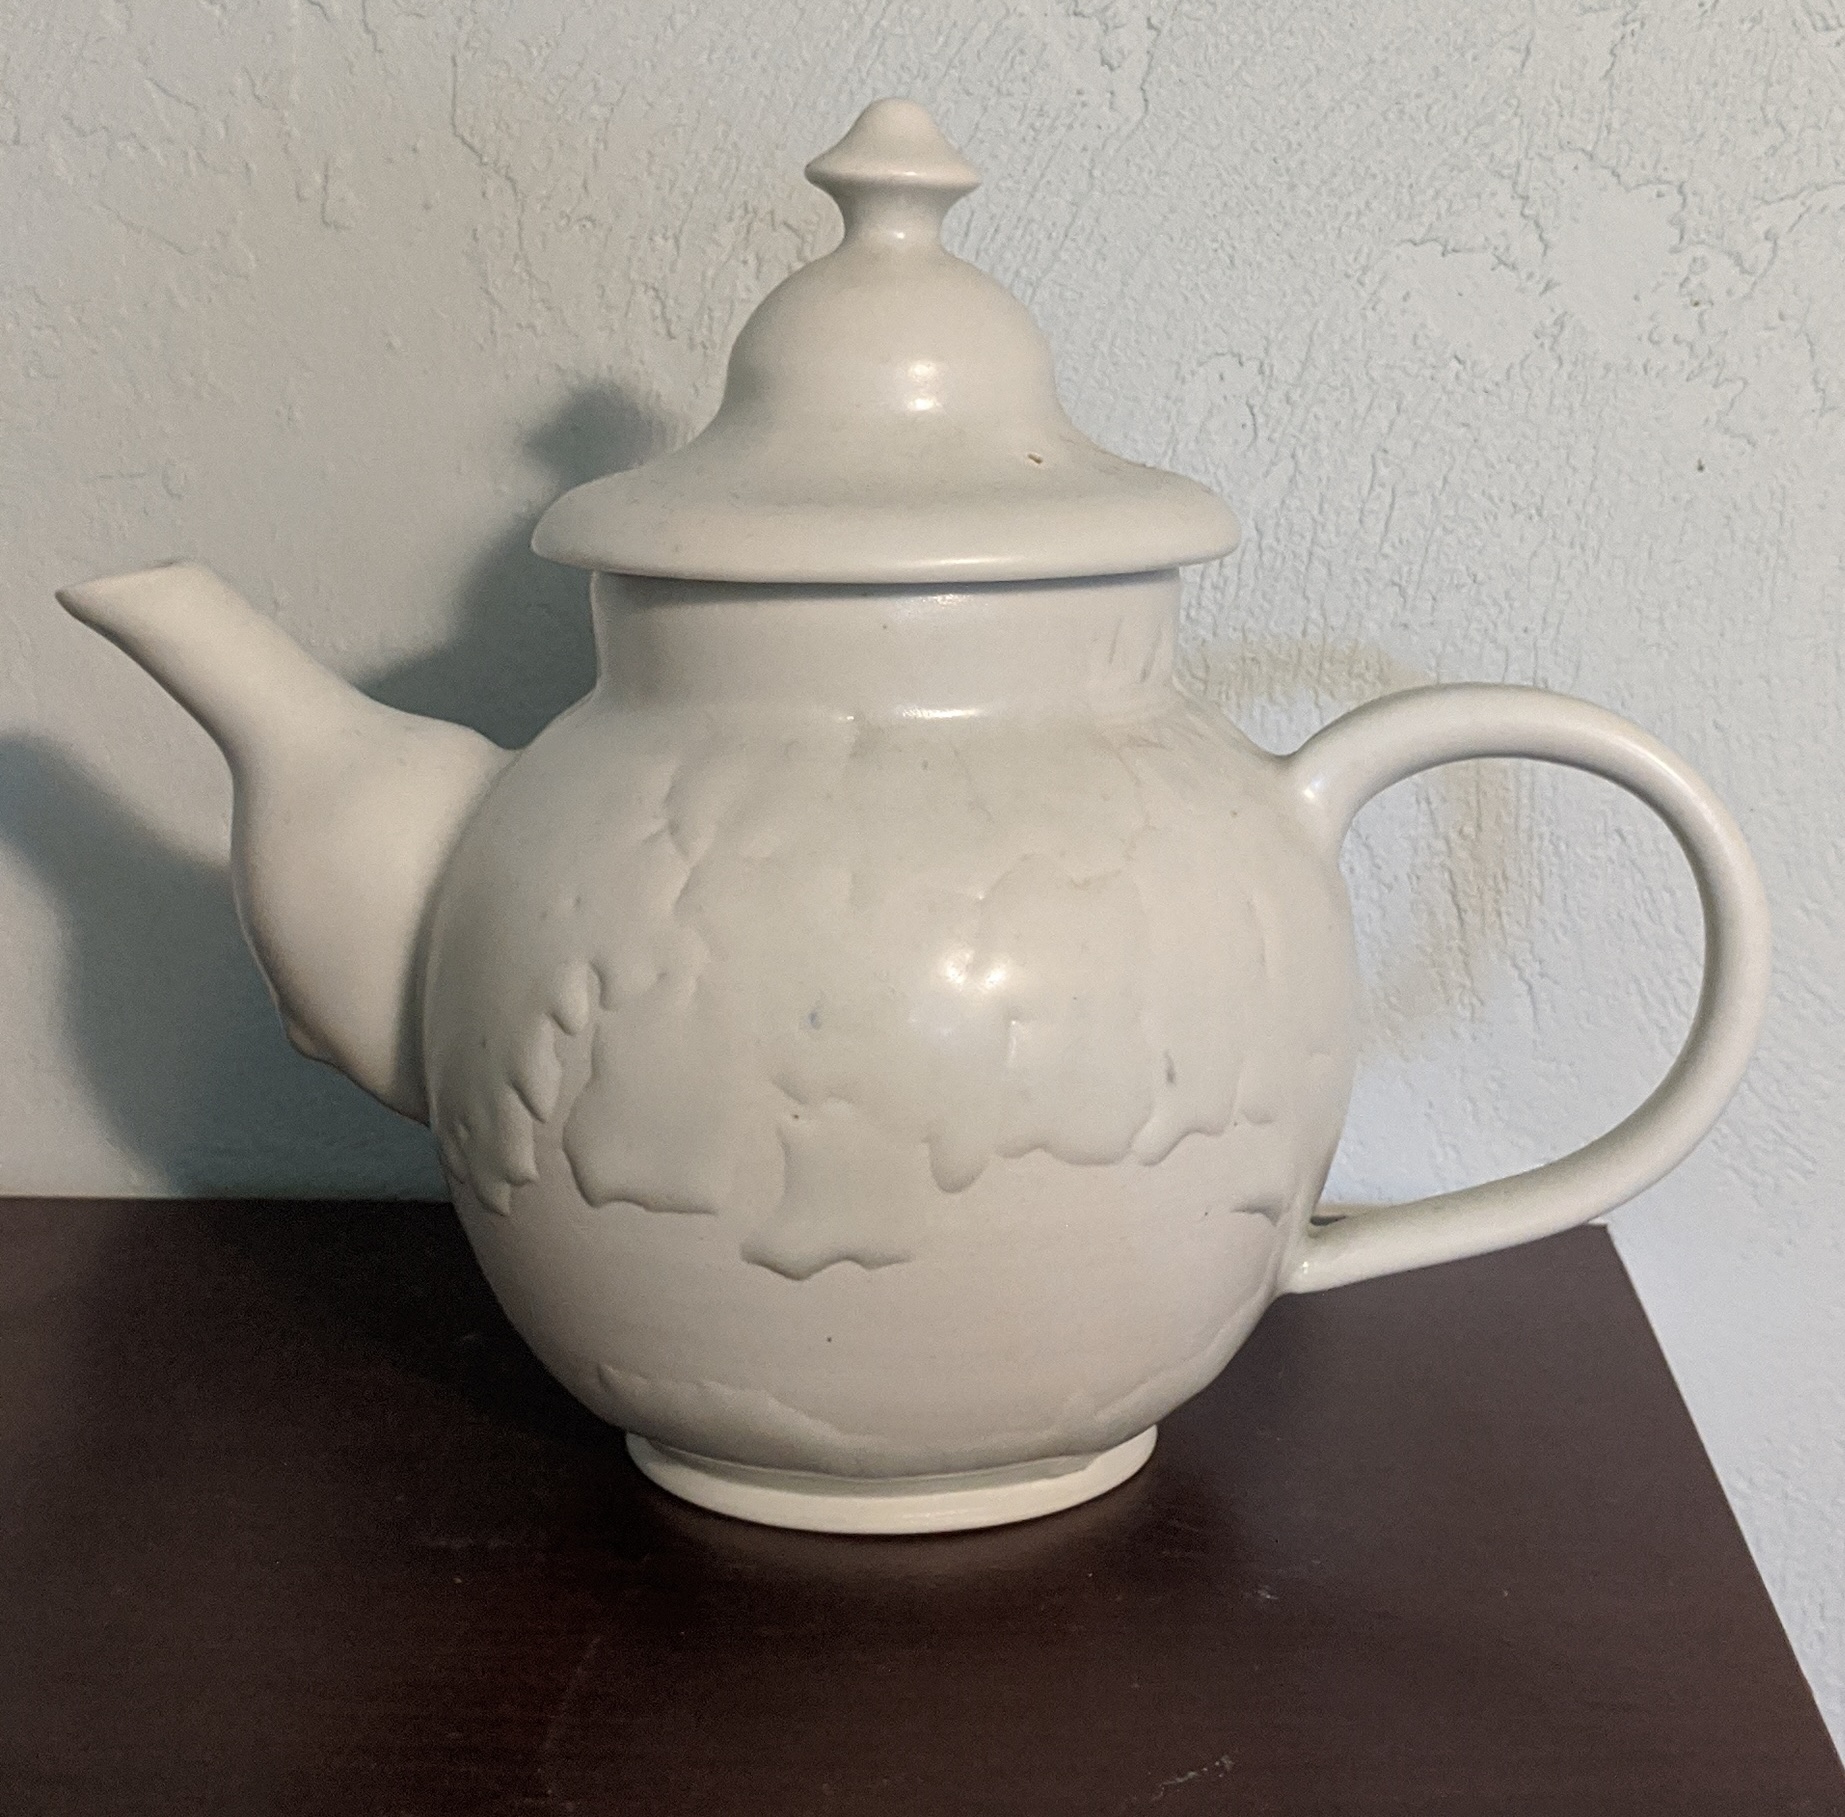 ceramic teapot on table